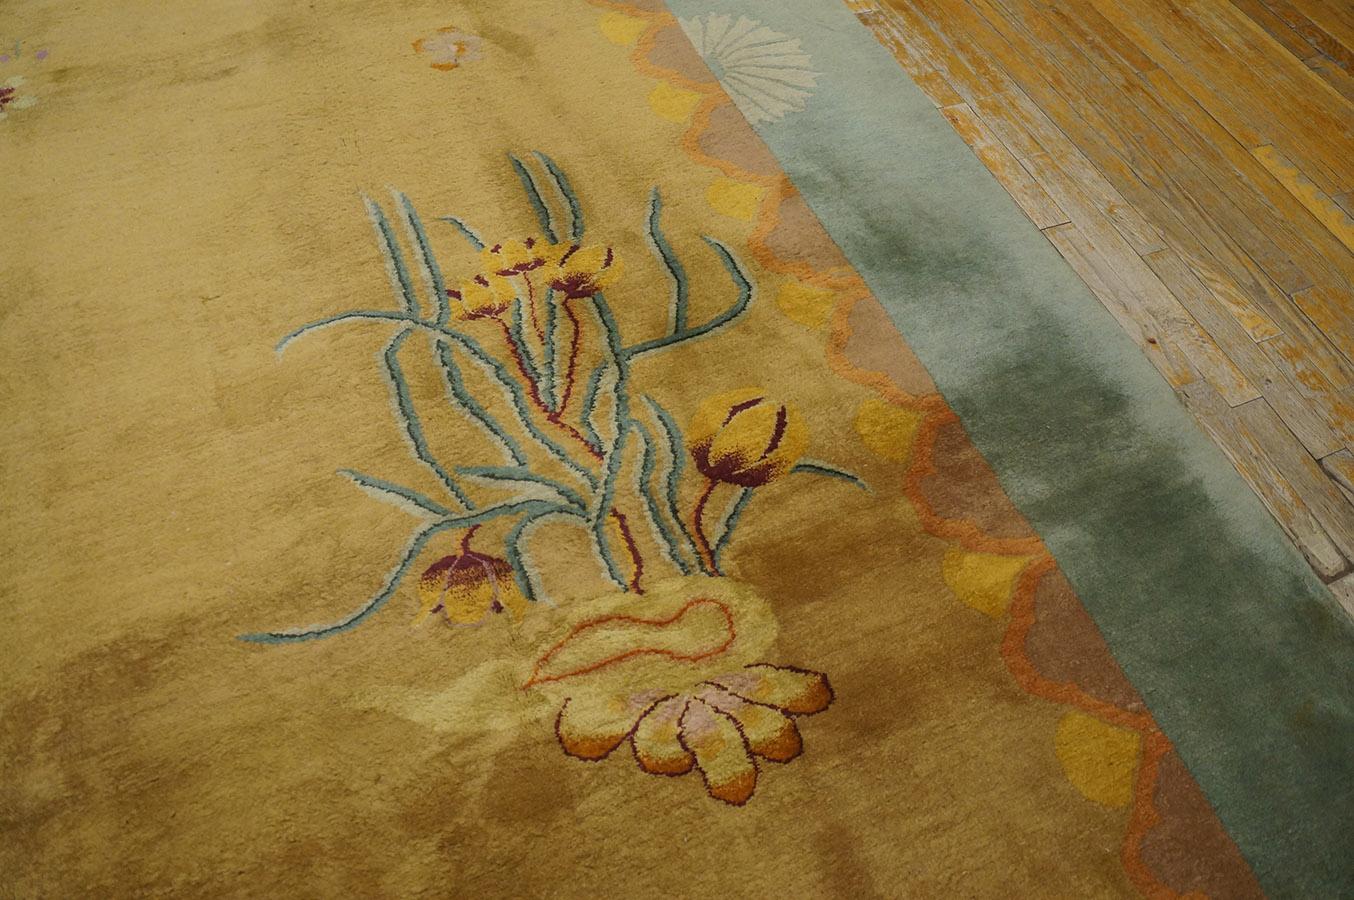 1920s Chinese Art Deco Carpet By Nichols Atelier ( 8'10